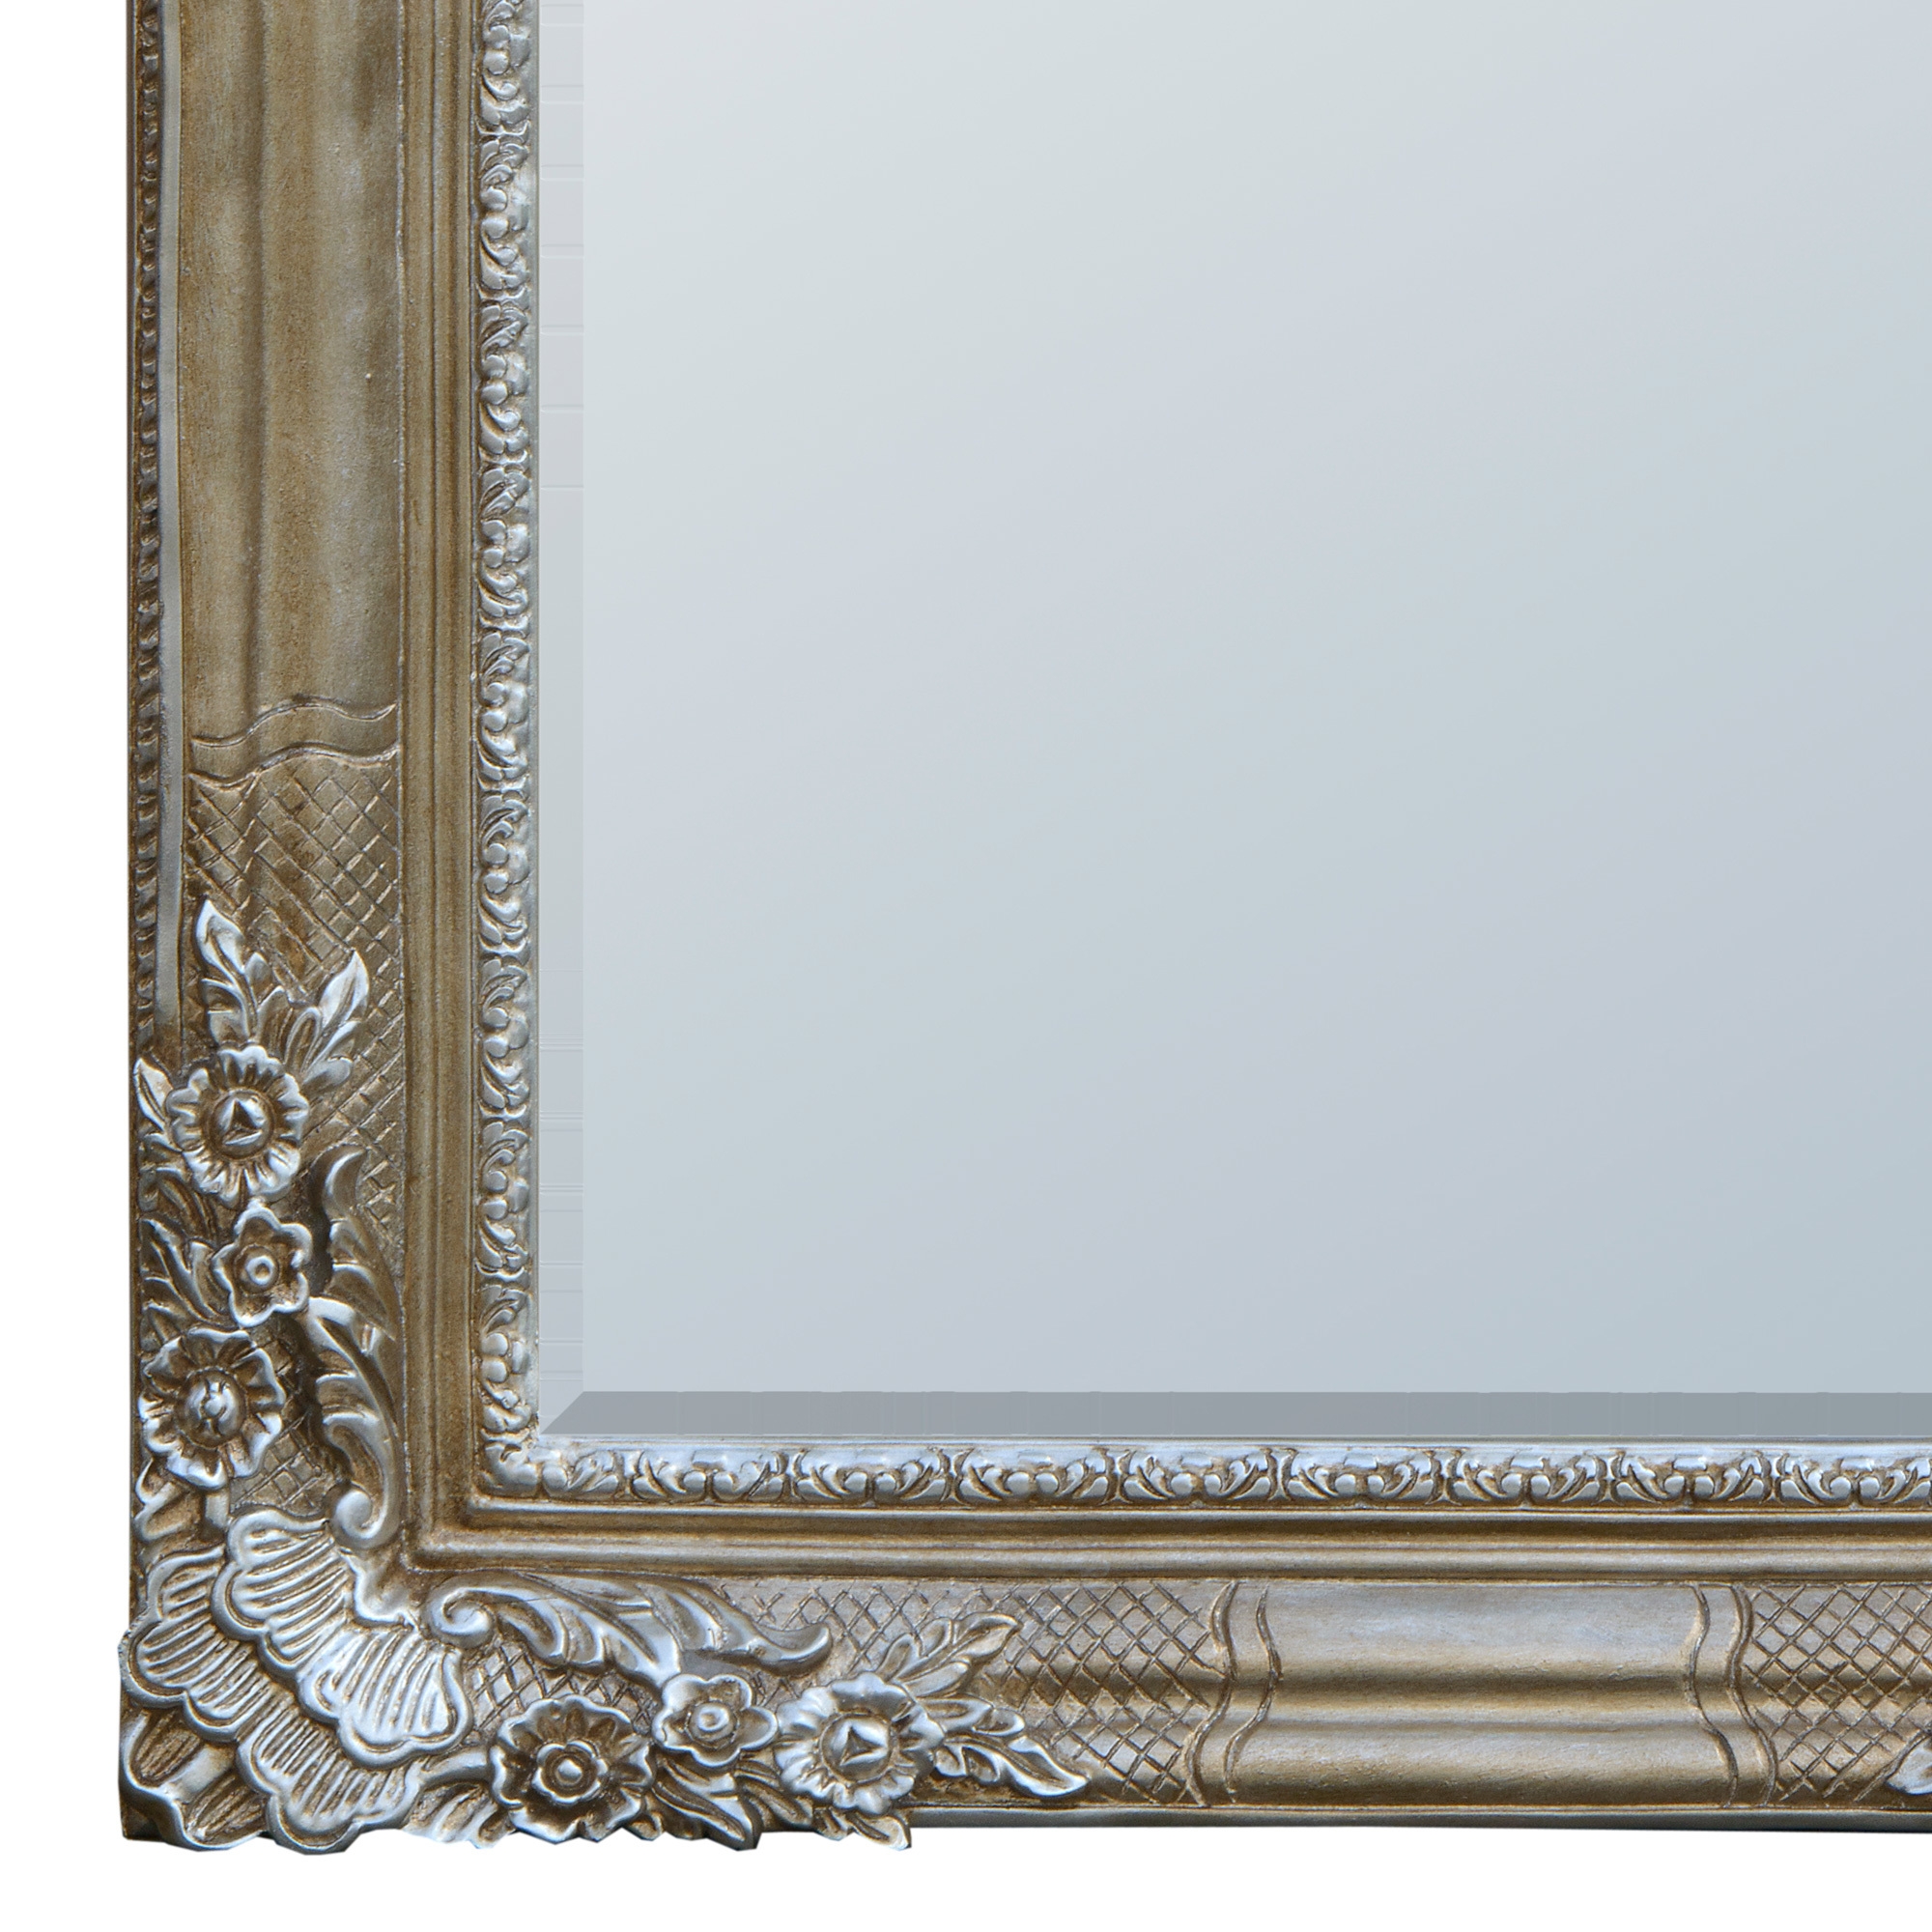 Antique Style Silver Bevelled Landscape Portrait Decorative Wall Mirror